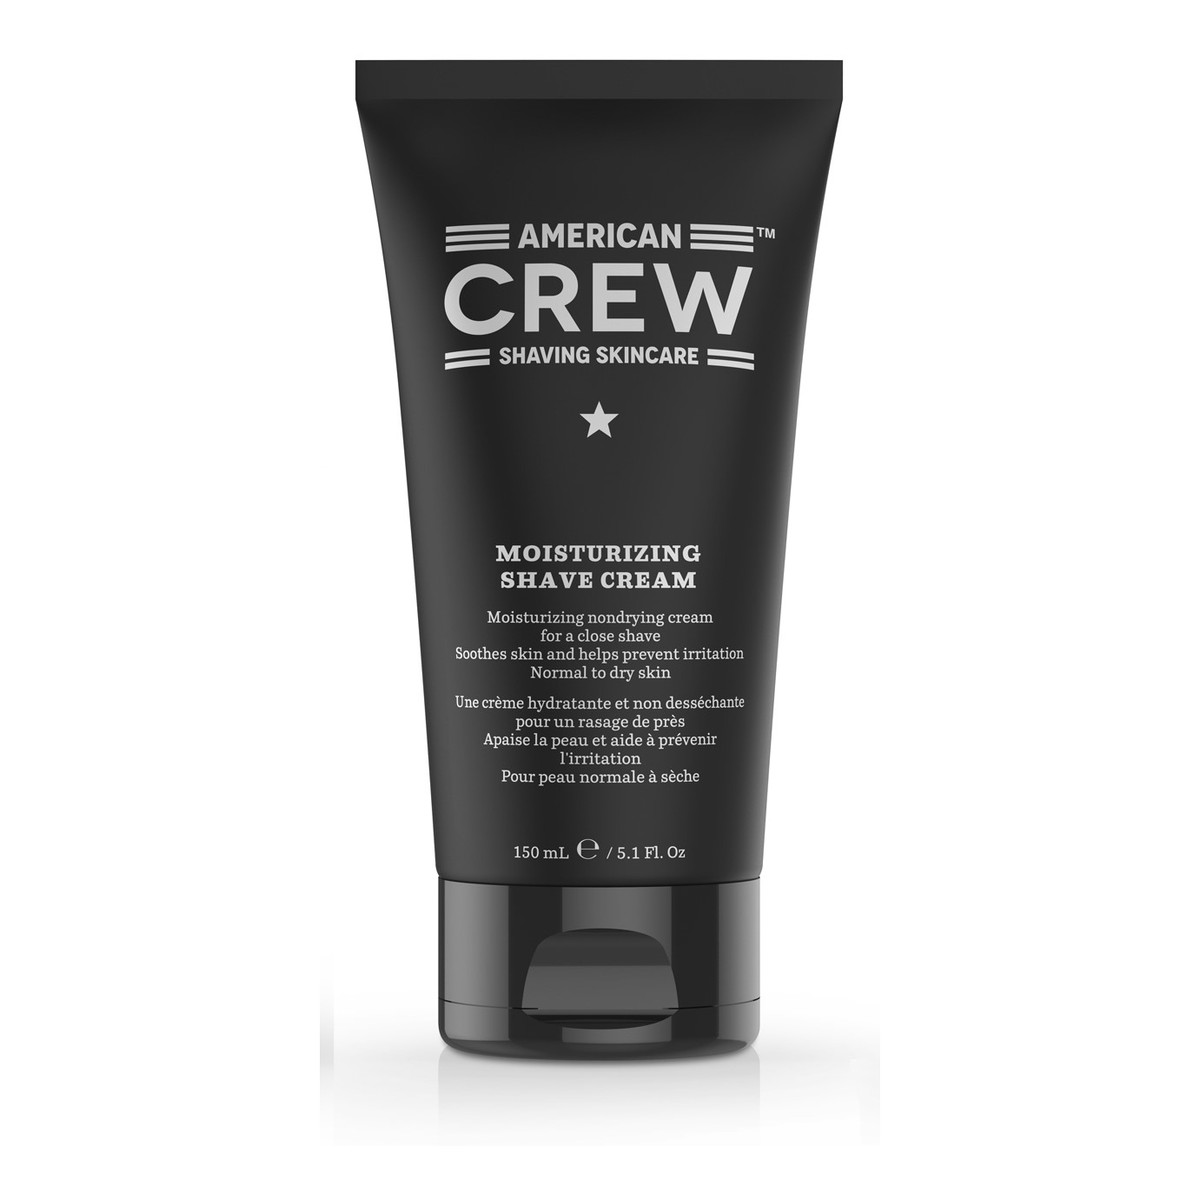 American Crew Shaving Skincare Moisturizing Shave Cream nawilżajacy krem po goleniu 150ml